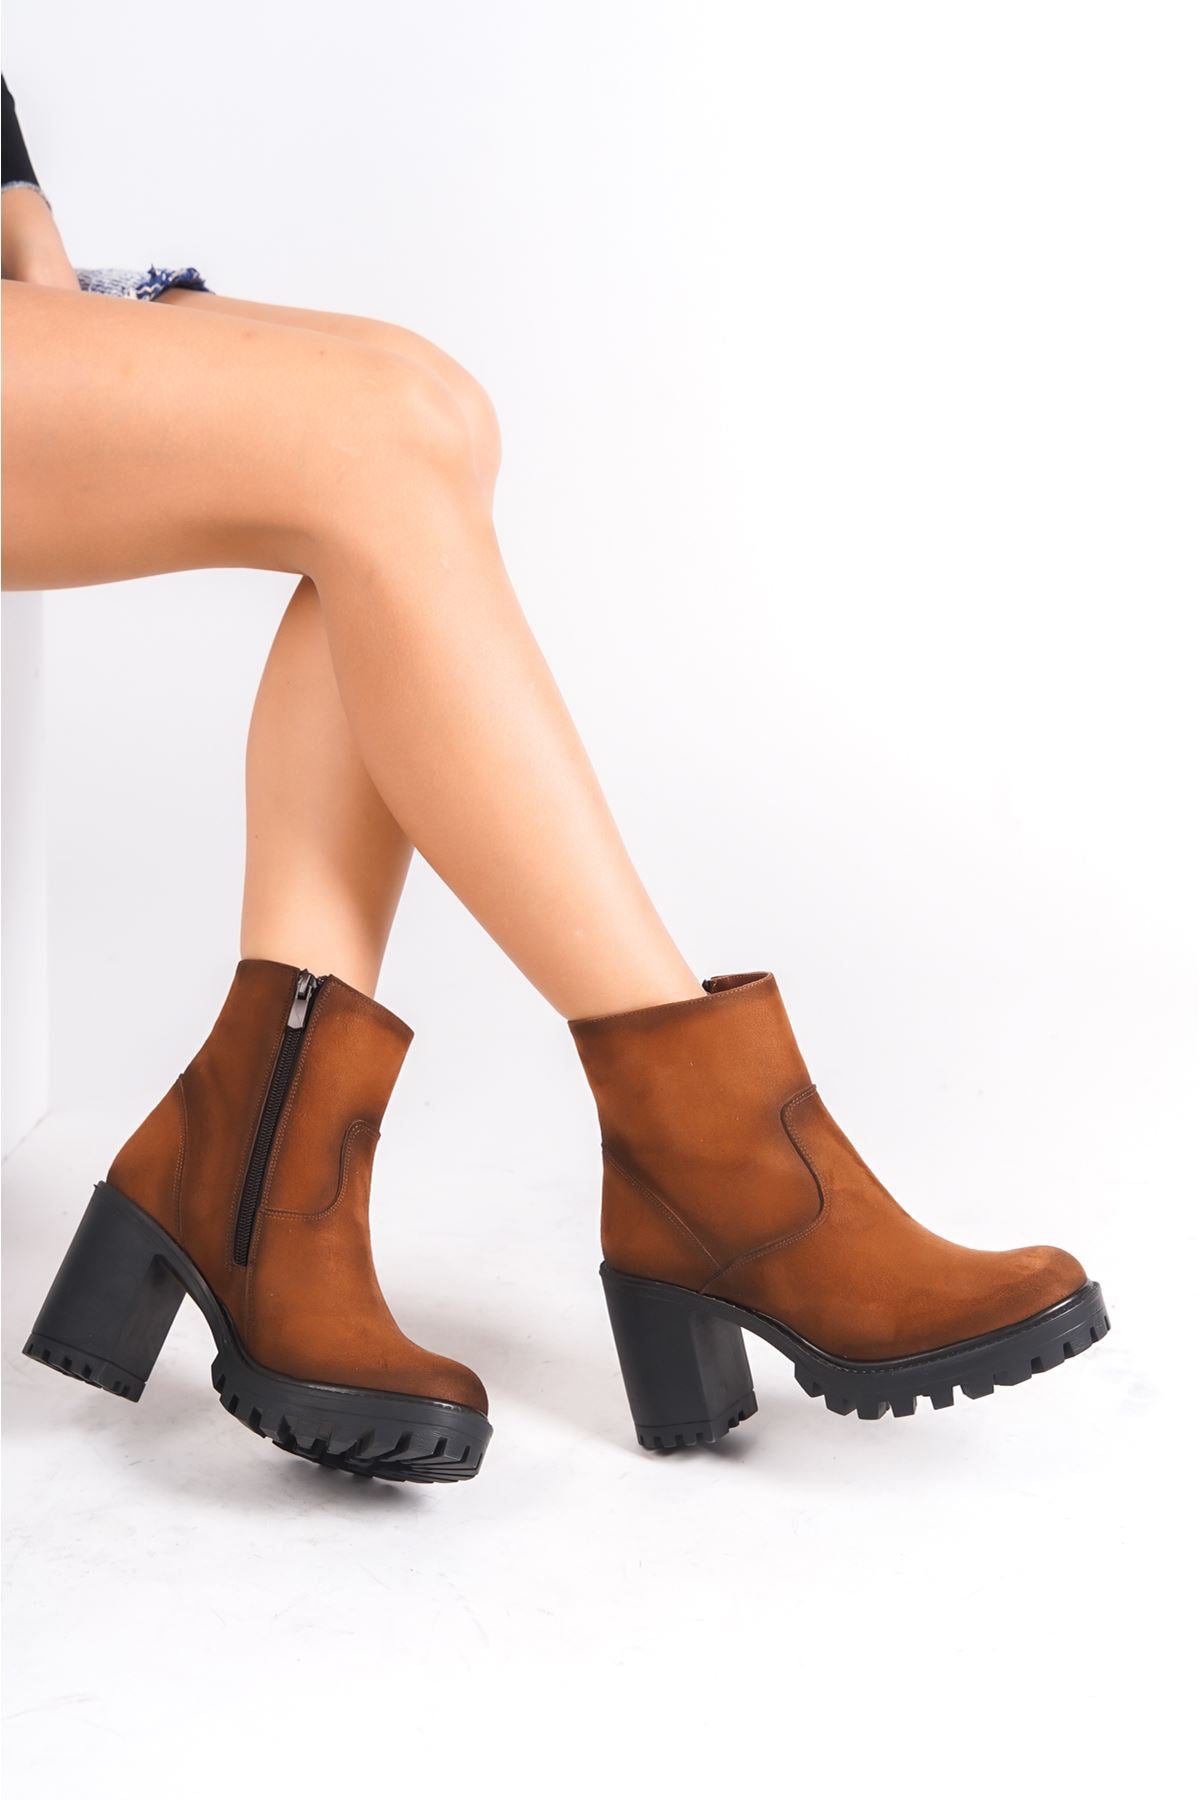 Nawen Tan Zippered Women's Heeled Boots - STREETMODE ™